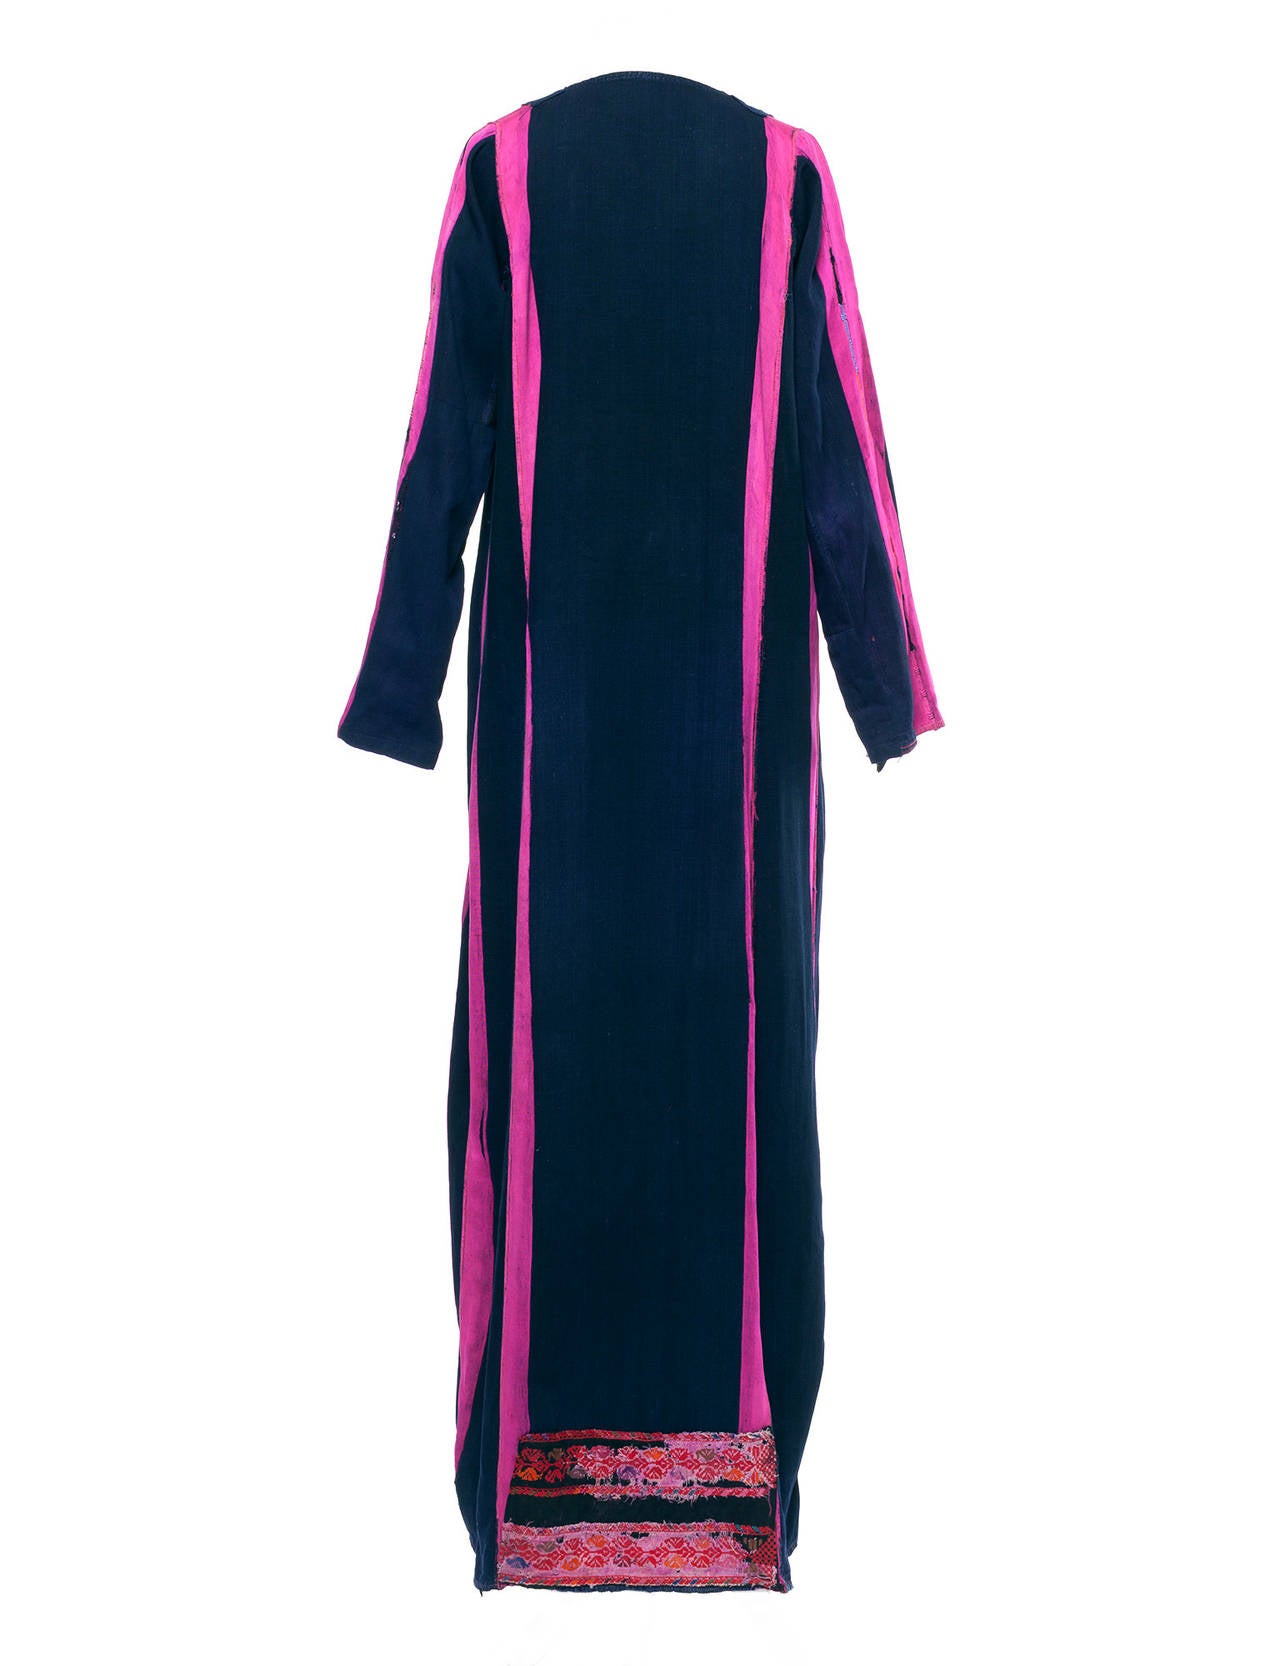 Women's 70s Vintage Palestinian Caftan with multi fabric details, Sz.S